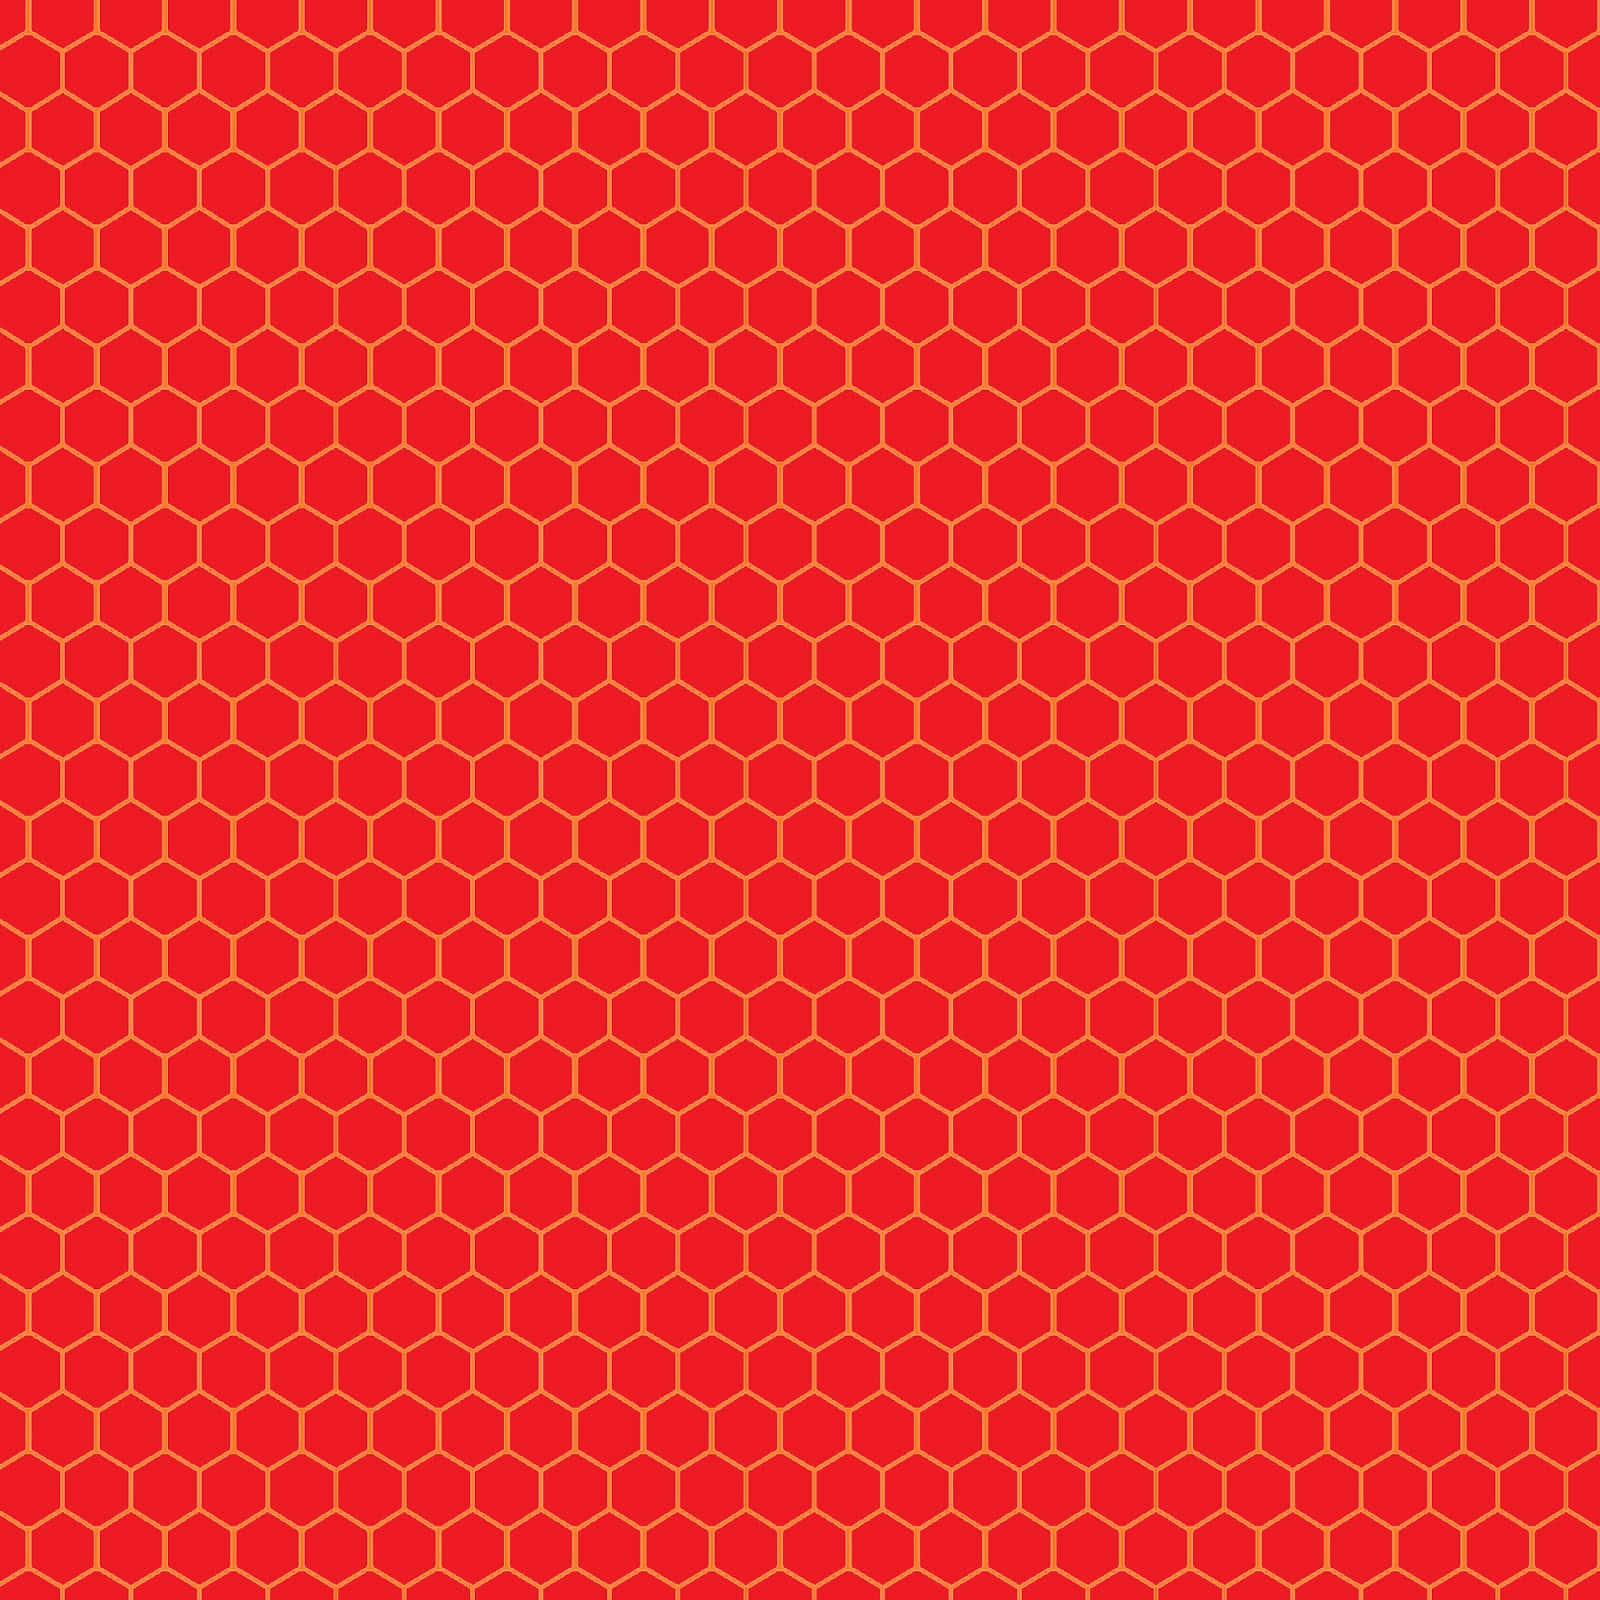 Imagende Patrón Hexagonal Rojo Estético De Panal De Miel